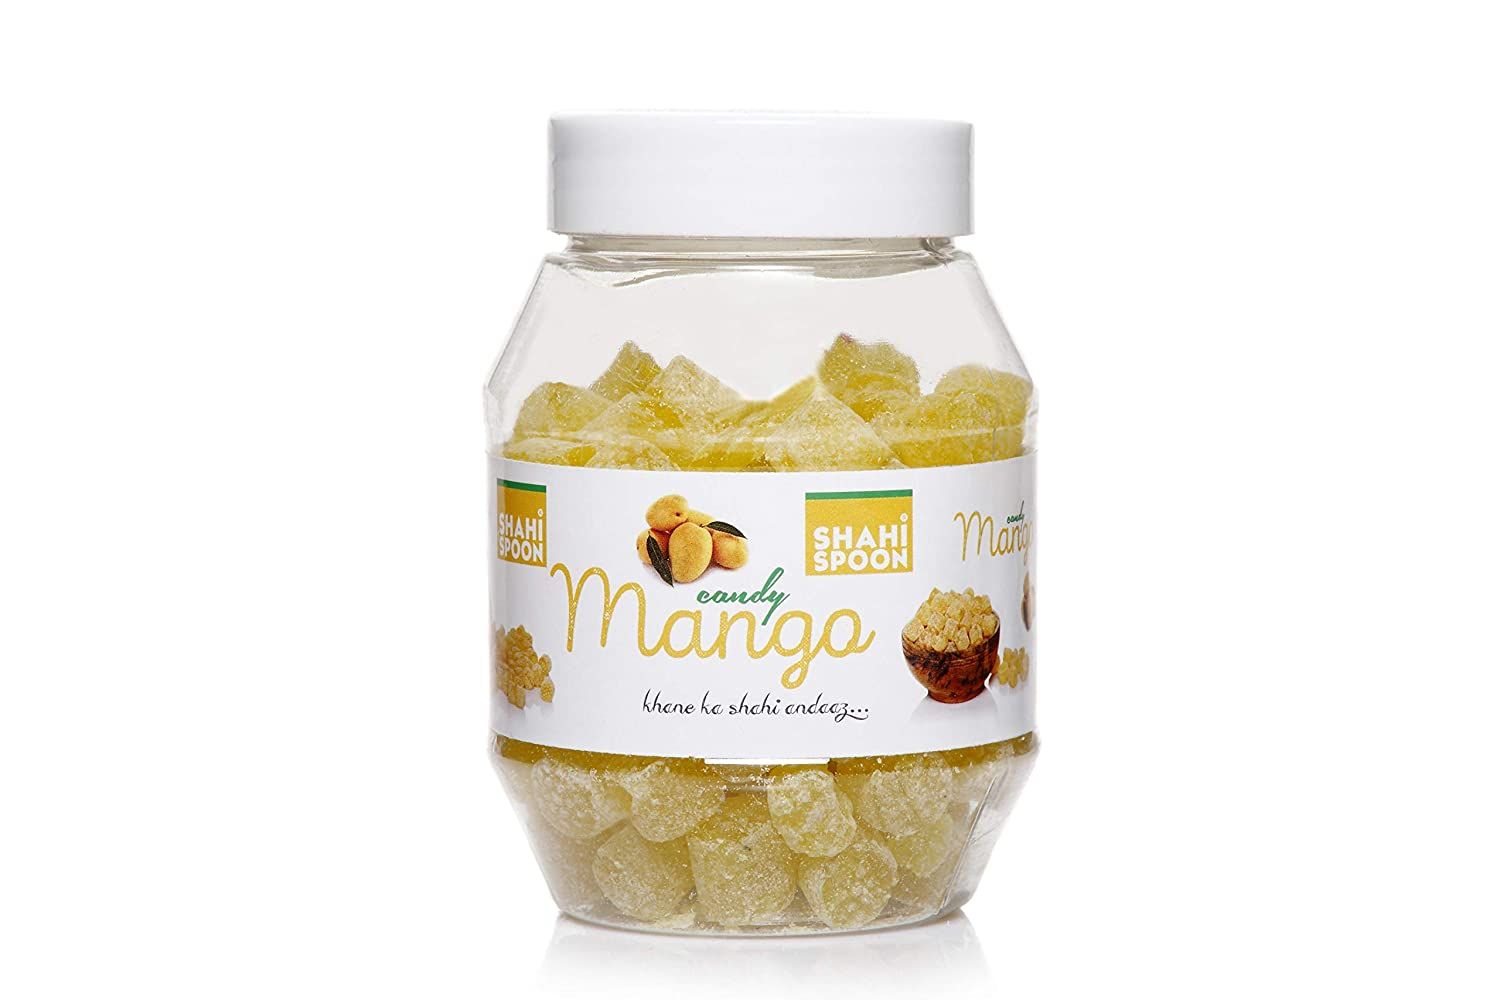 Shahi Spoon Mango Candy Image